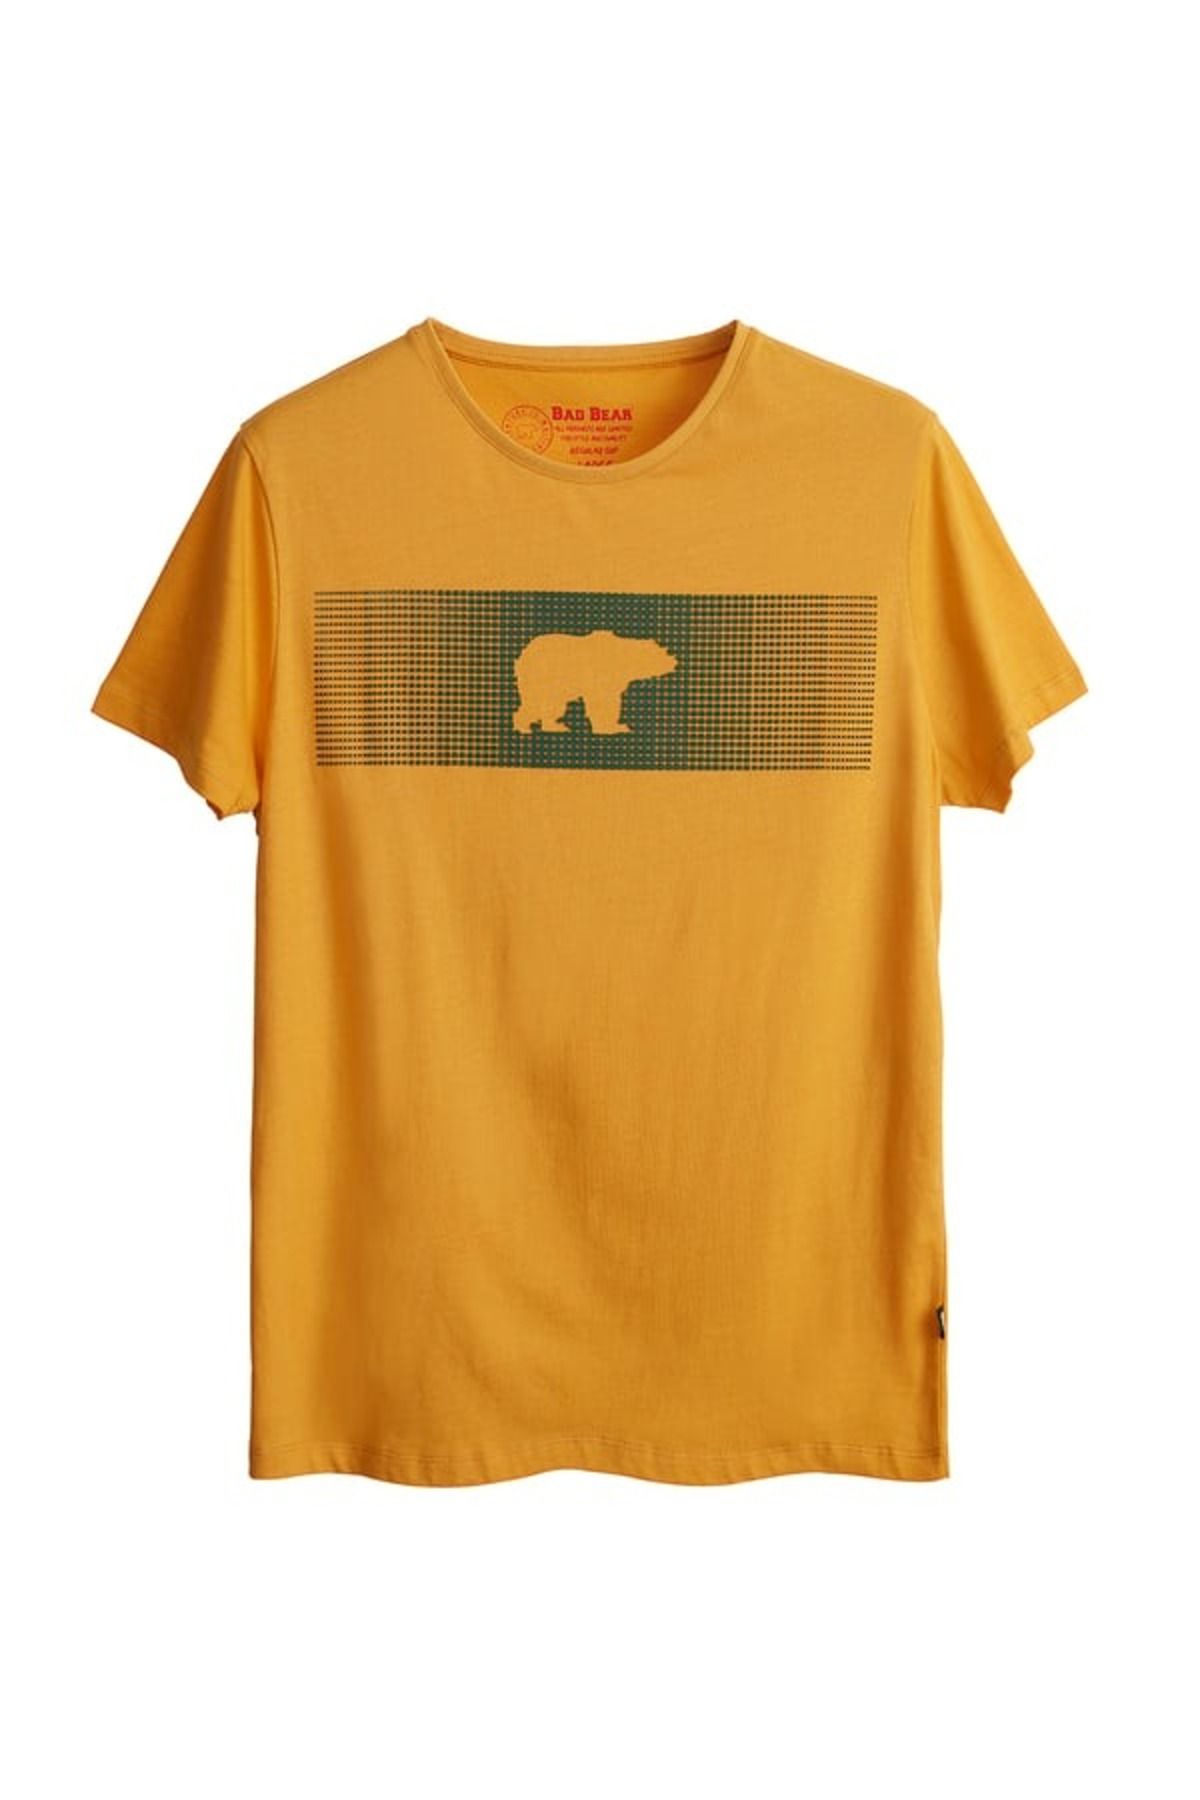 Bad Bear Fancy Erkek T-shirt 20.01.07.024 Cıder